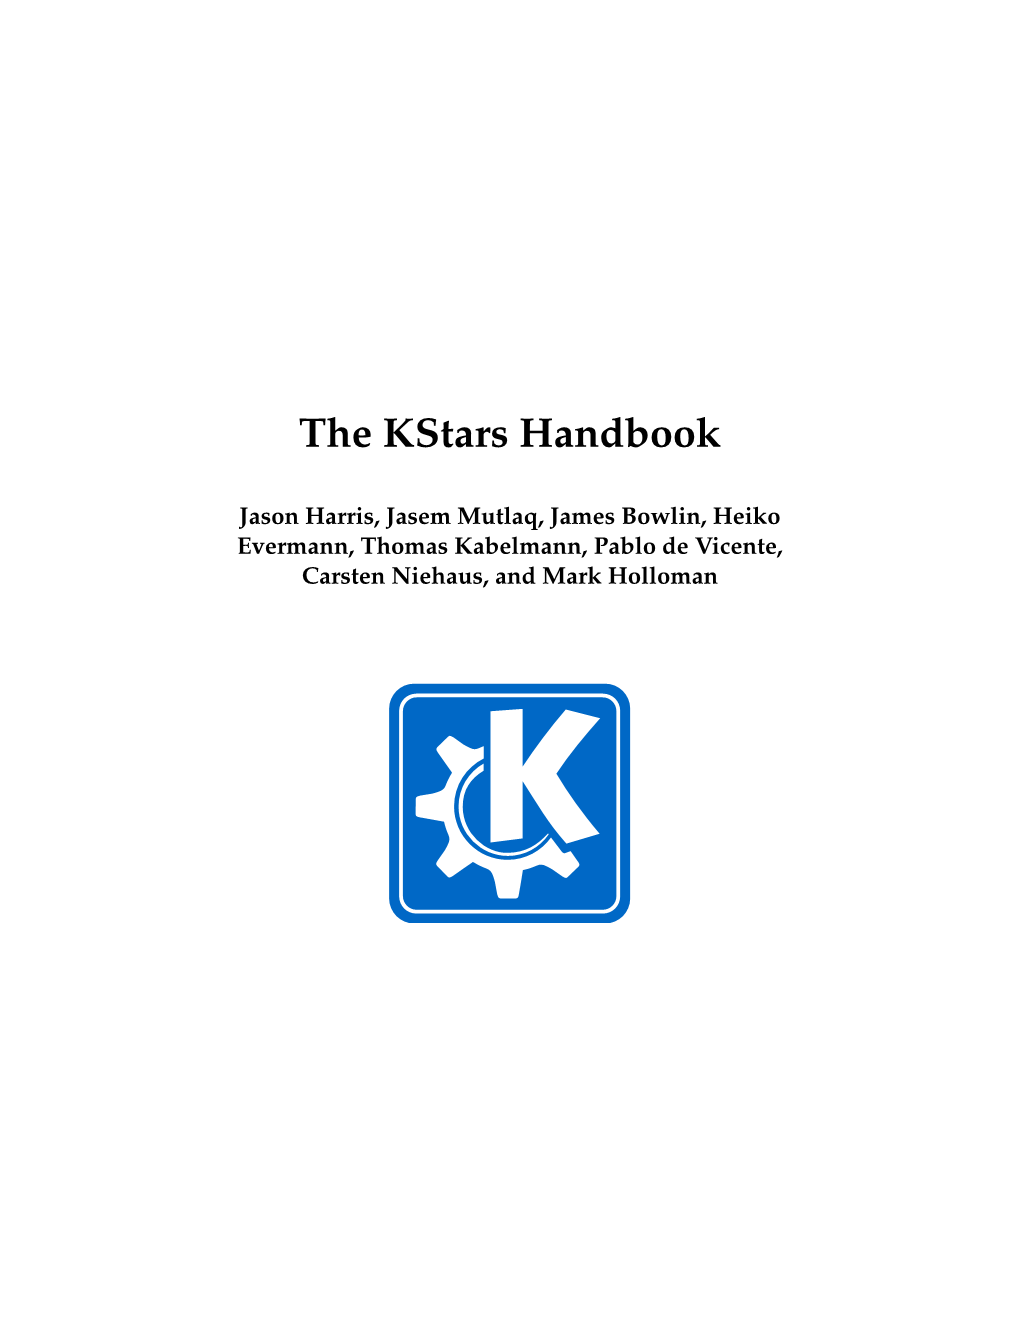 The Kstars Handbook